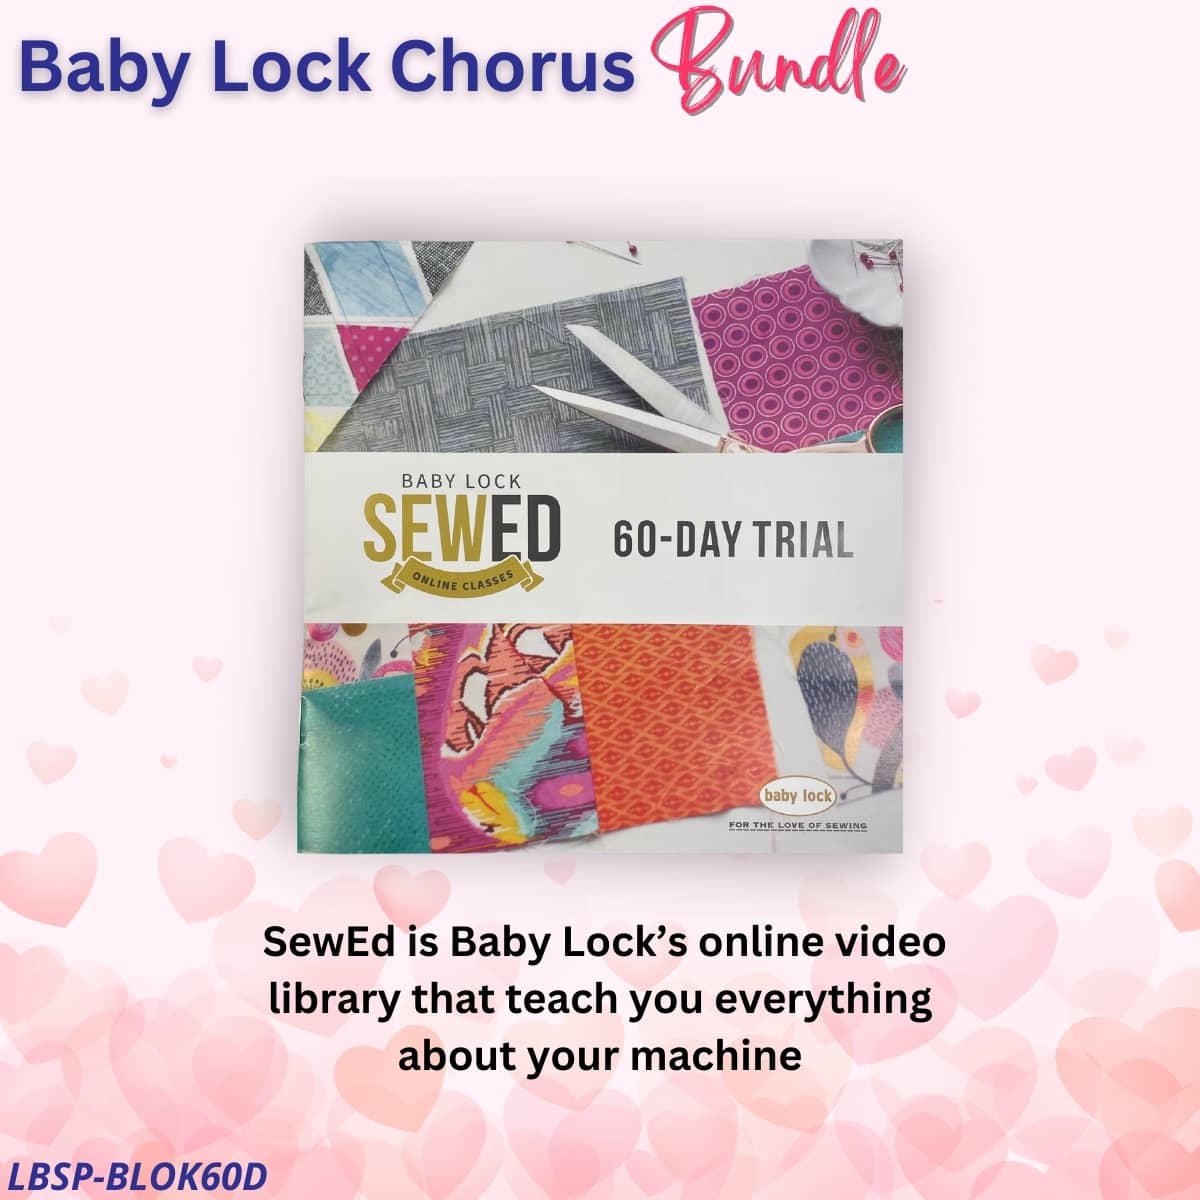 Baby Lock Chorus bundle for Valentine's Sale